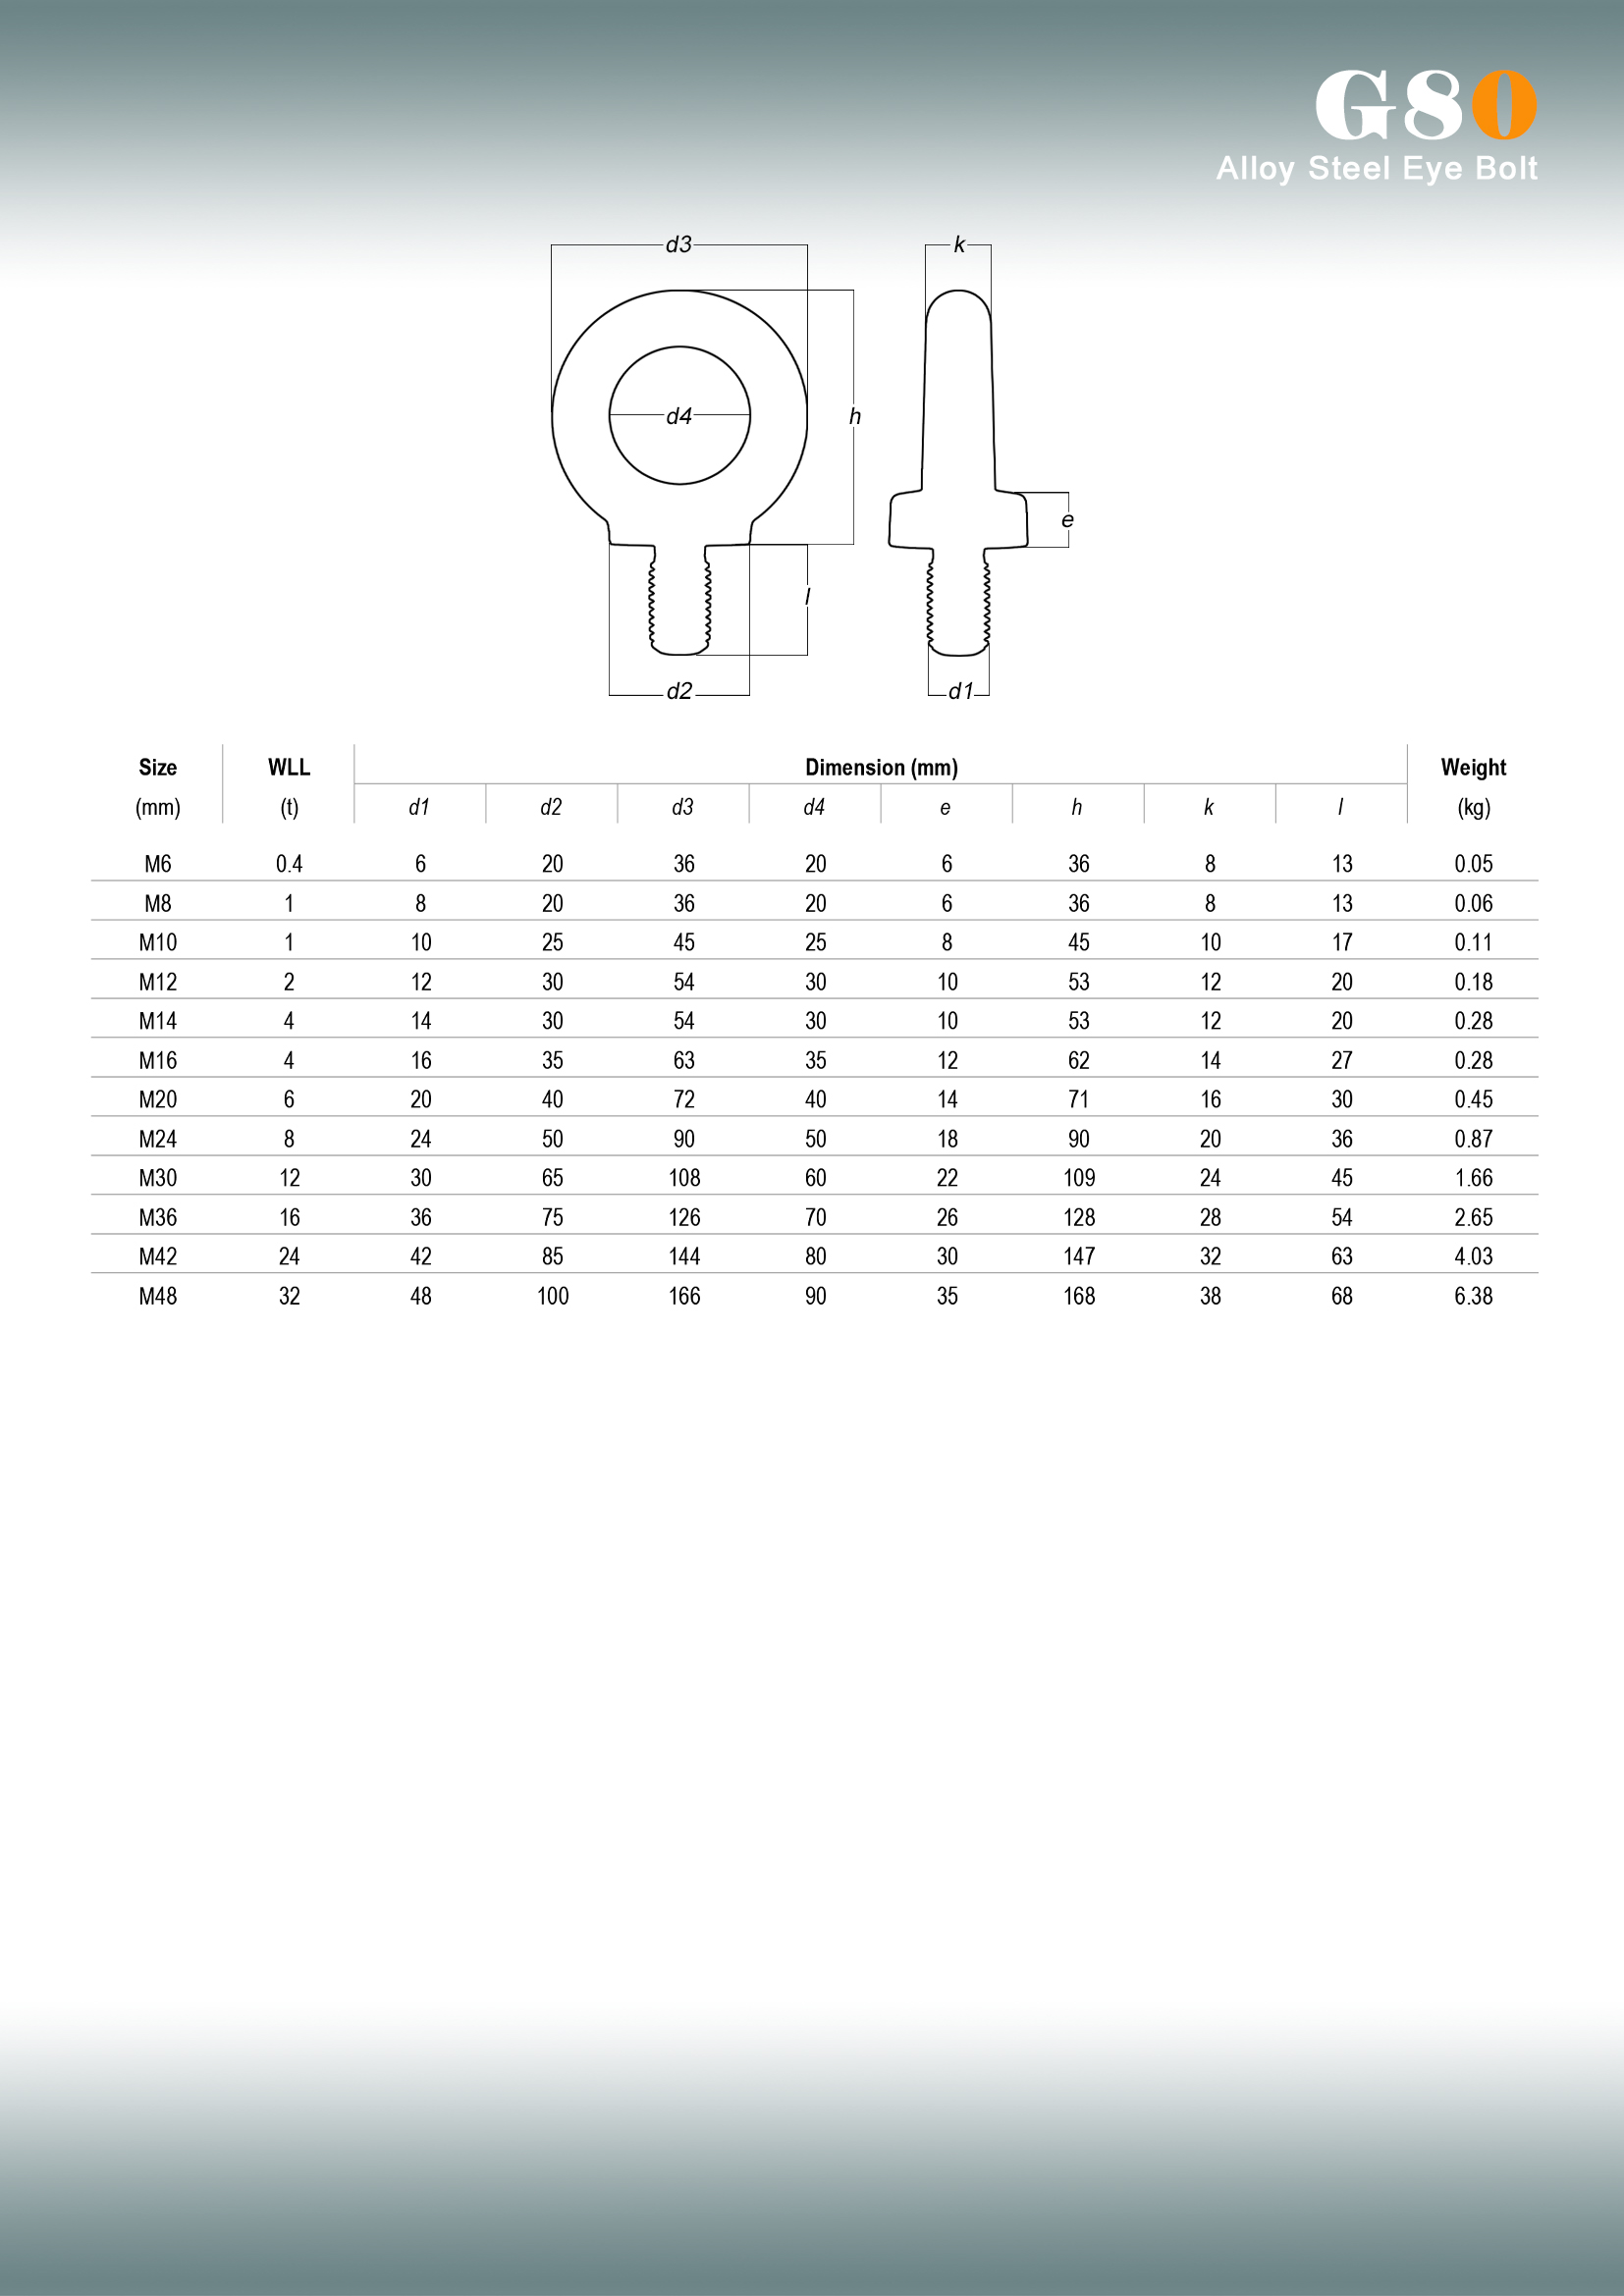 IEL-9183E - 单页画册20210713 - 产品规格.jpg